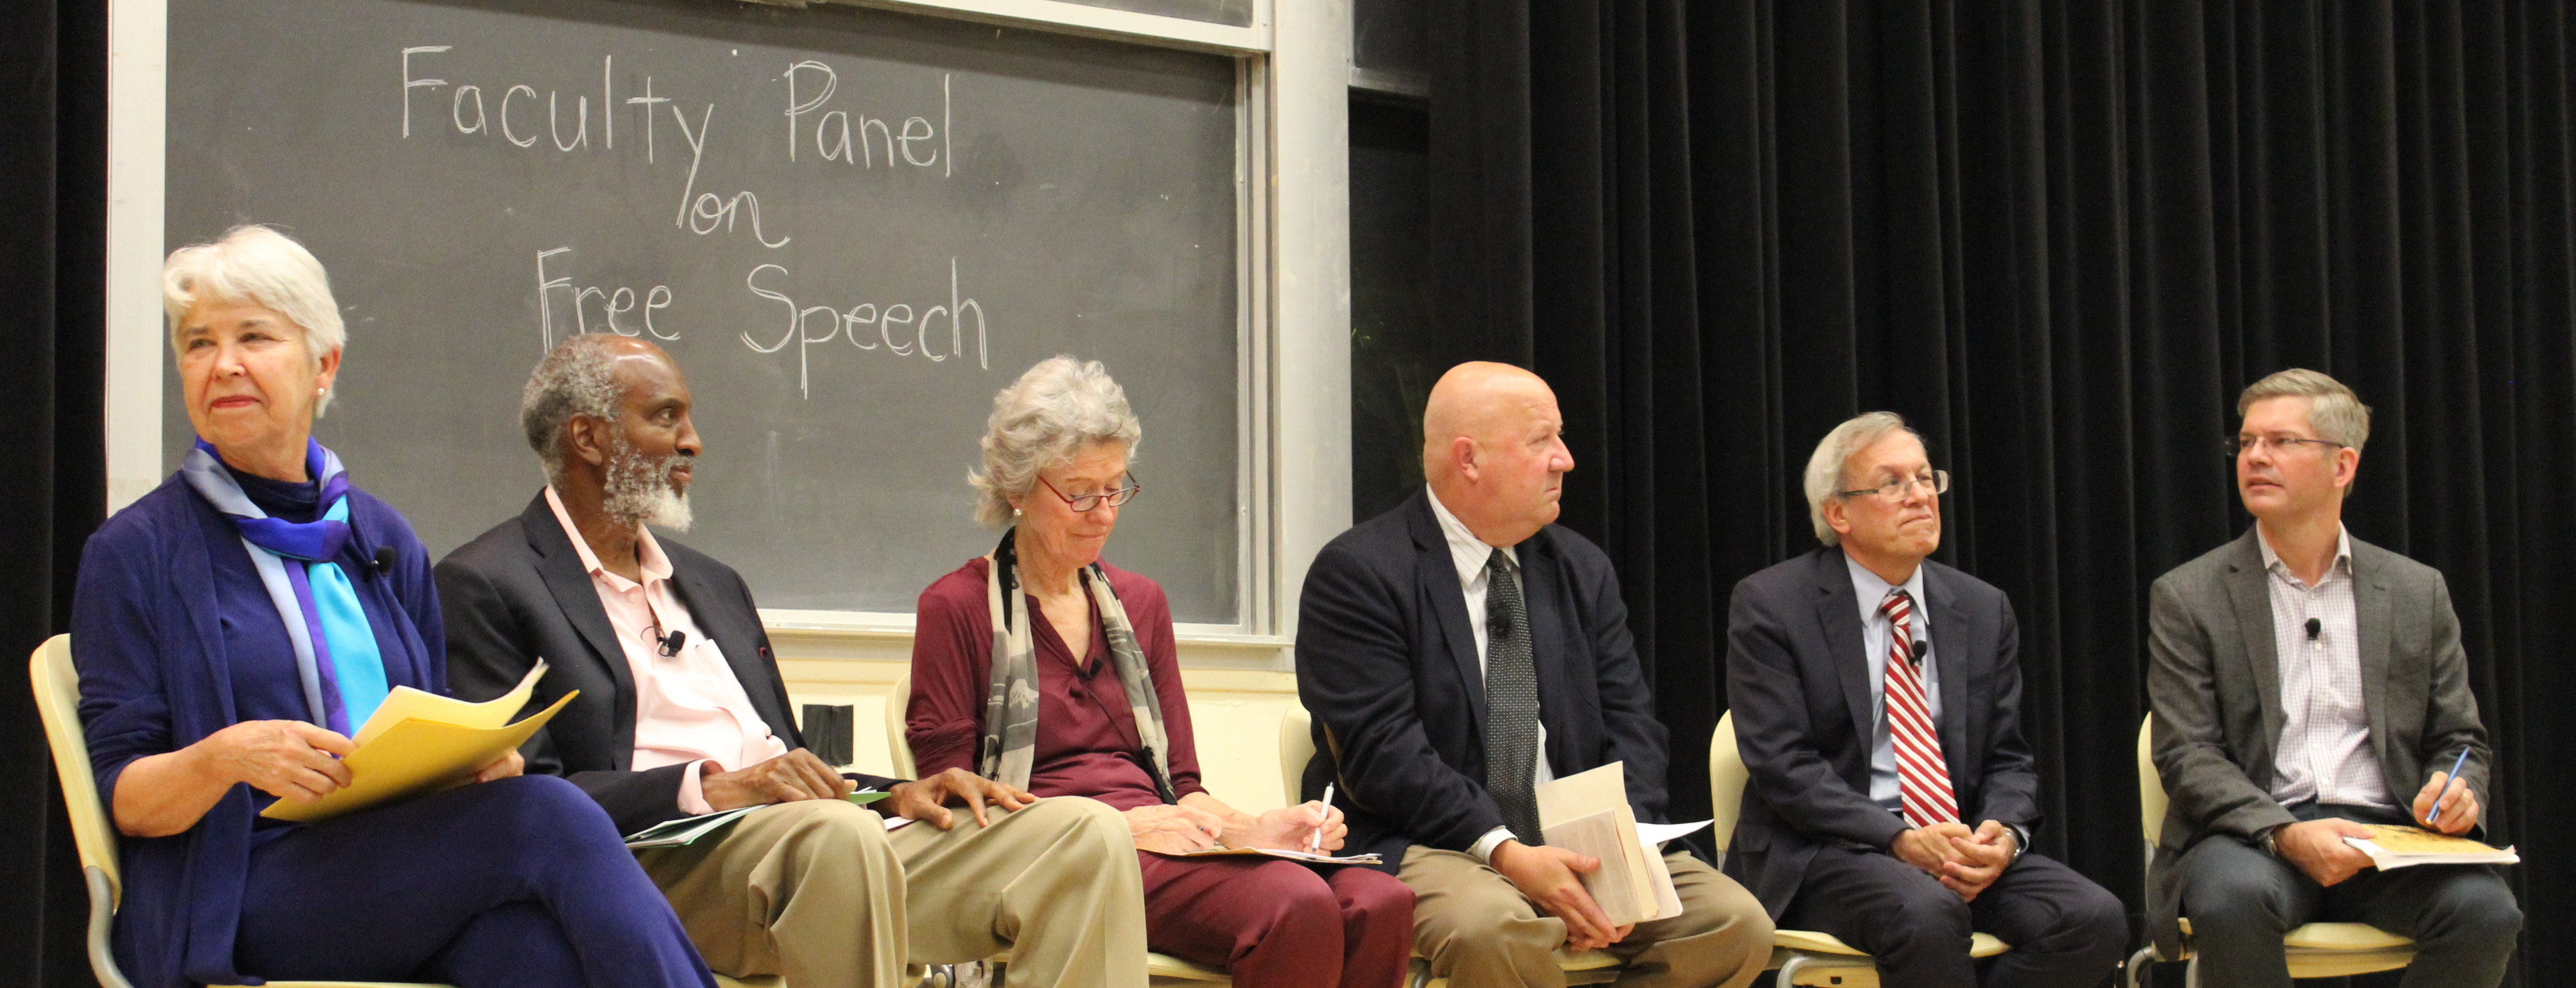 Faculty panel on free speech